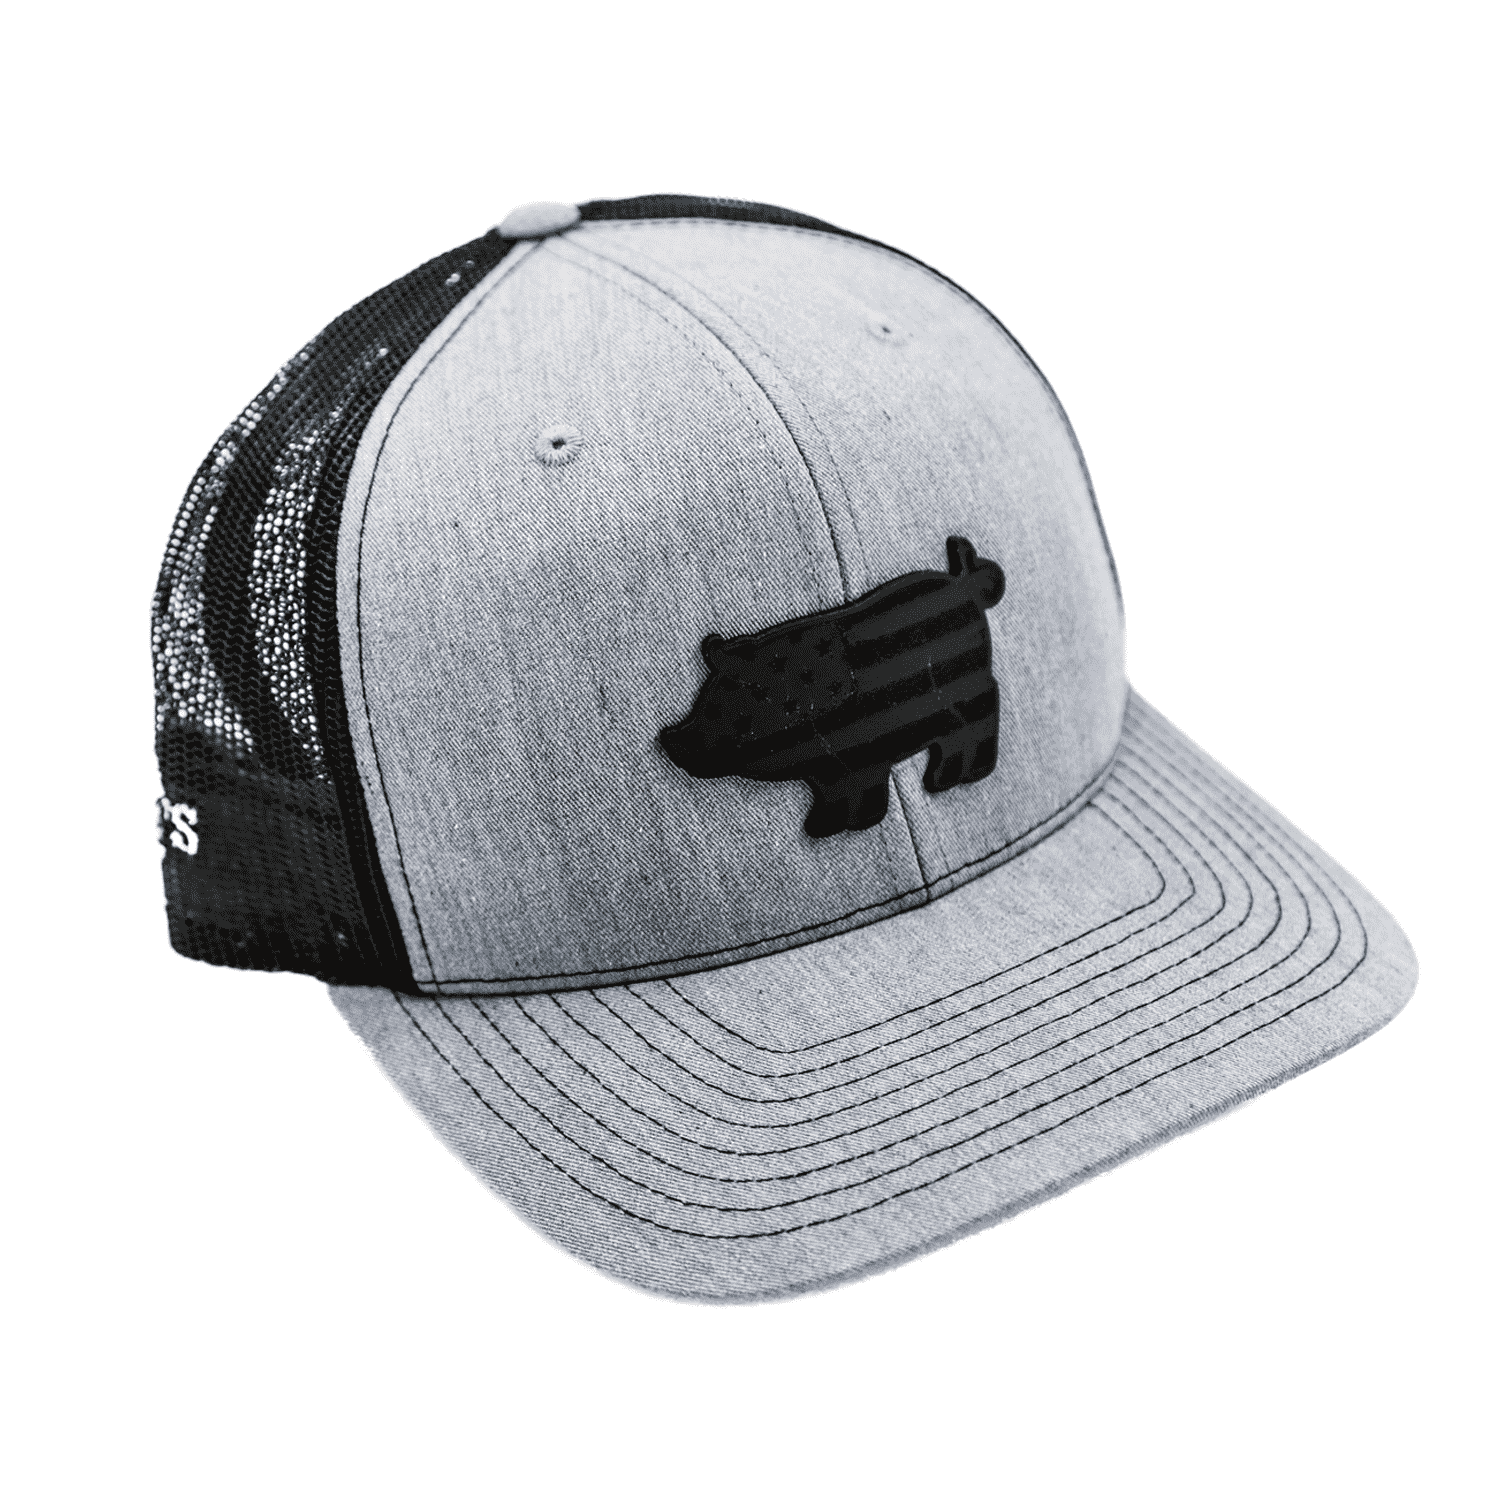 American Pig Hat - Grey and Black